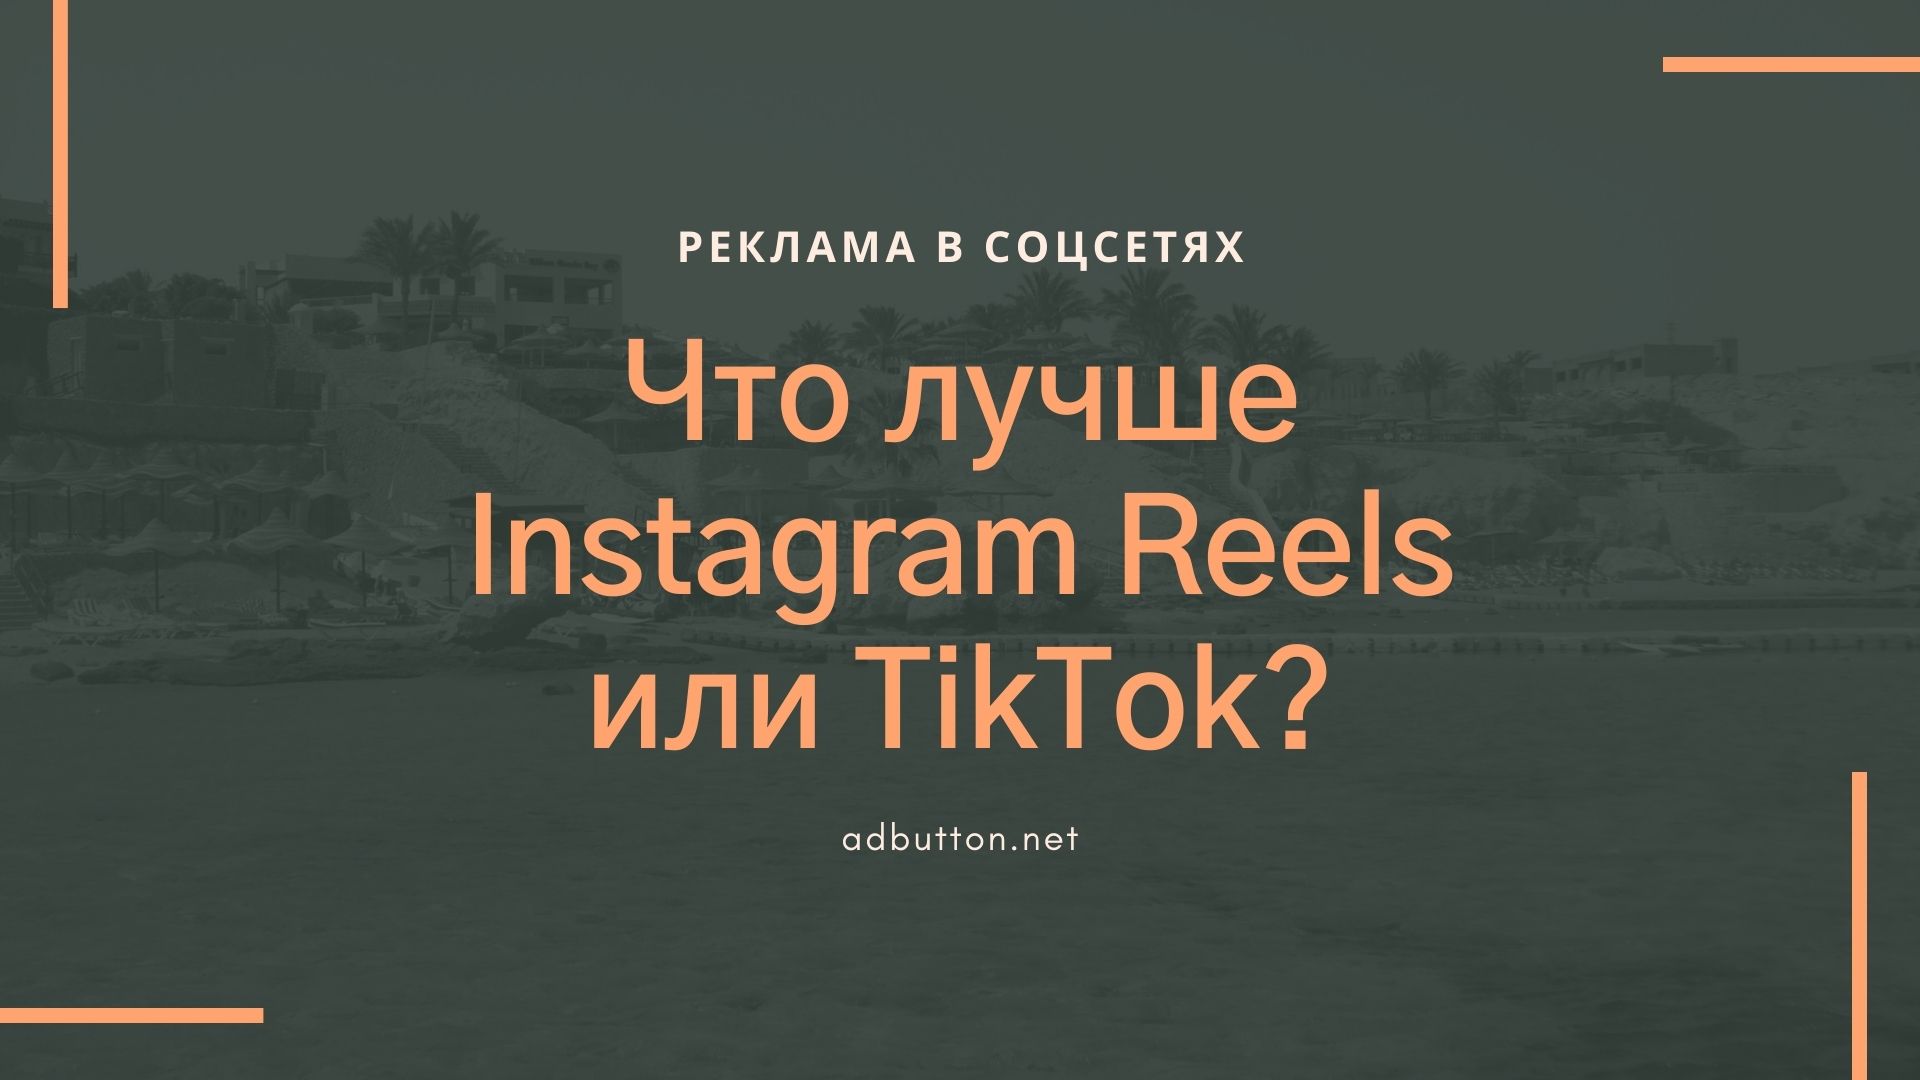 Instagram Reels и TikTok — Какая платформа для рекламы лучше?